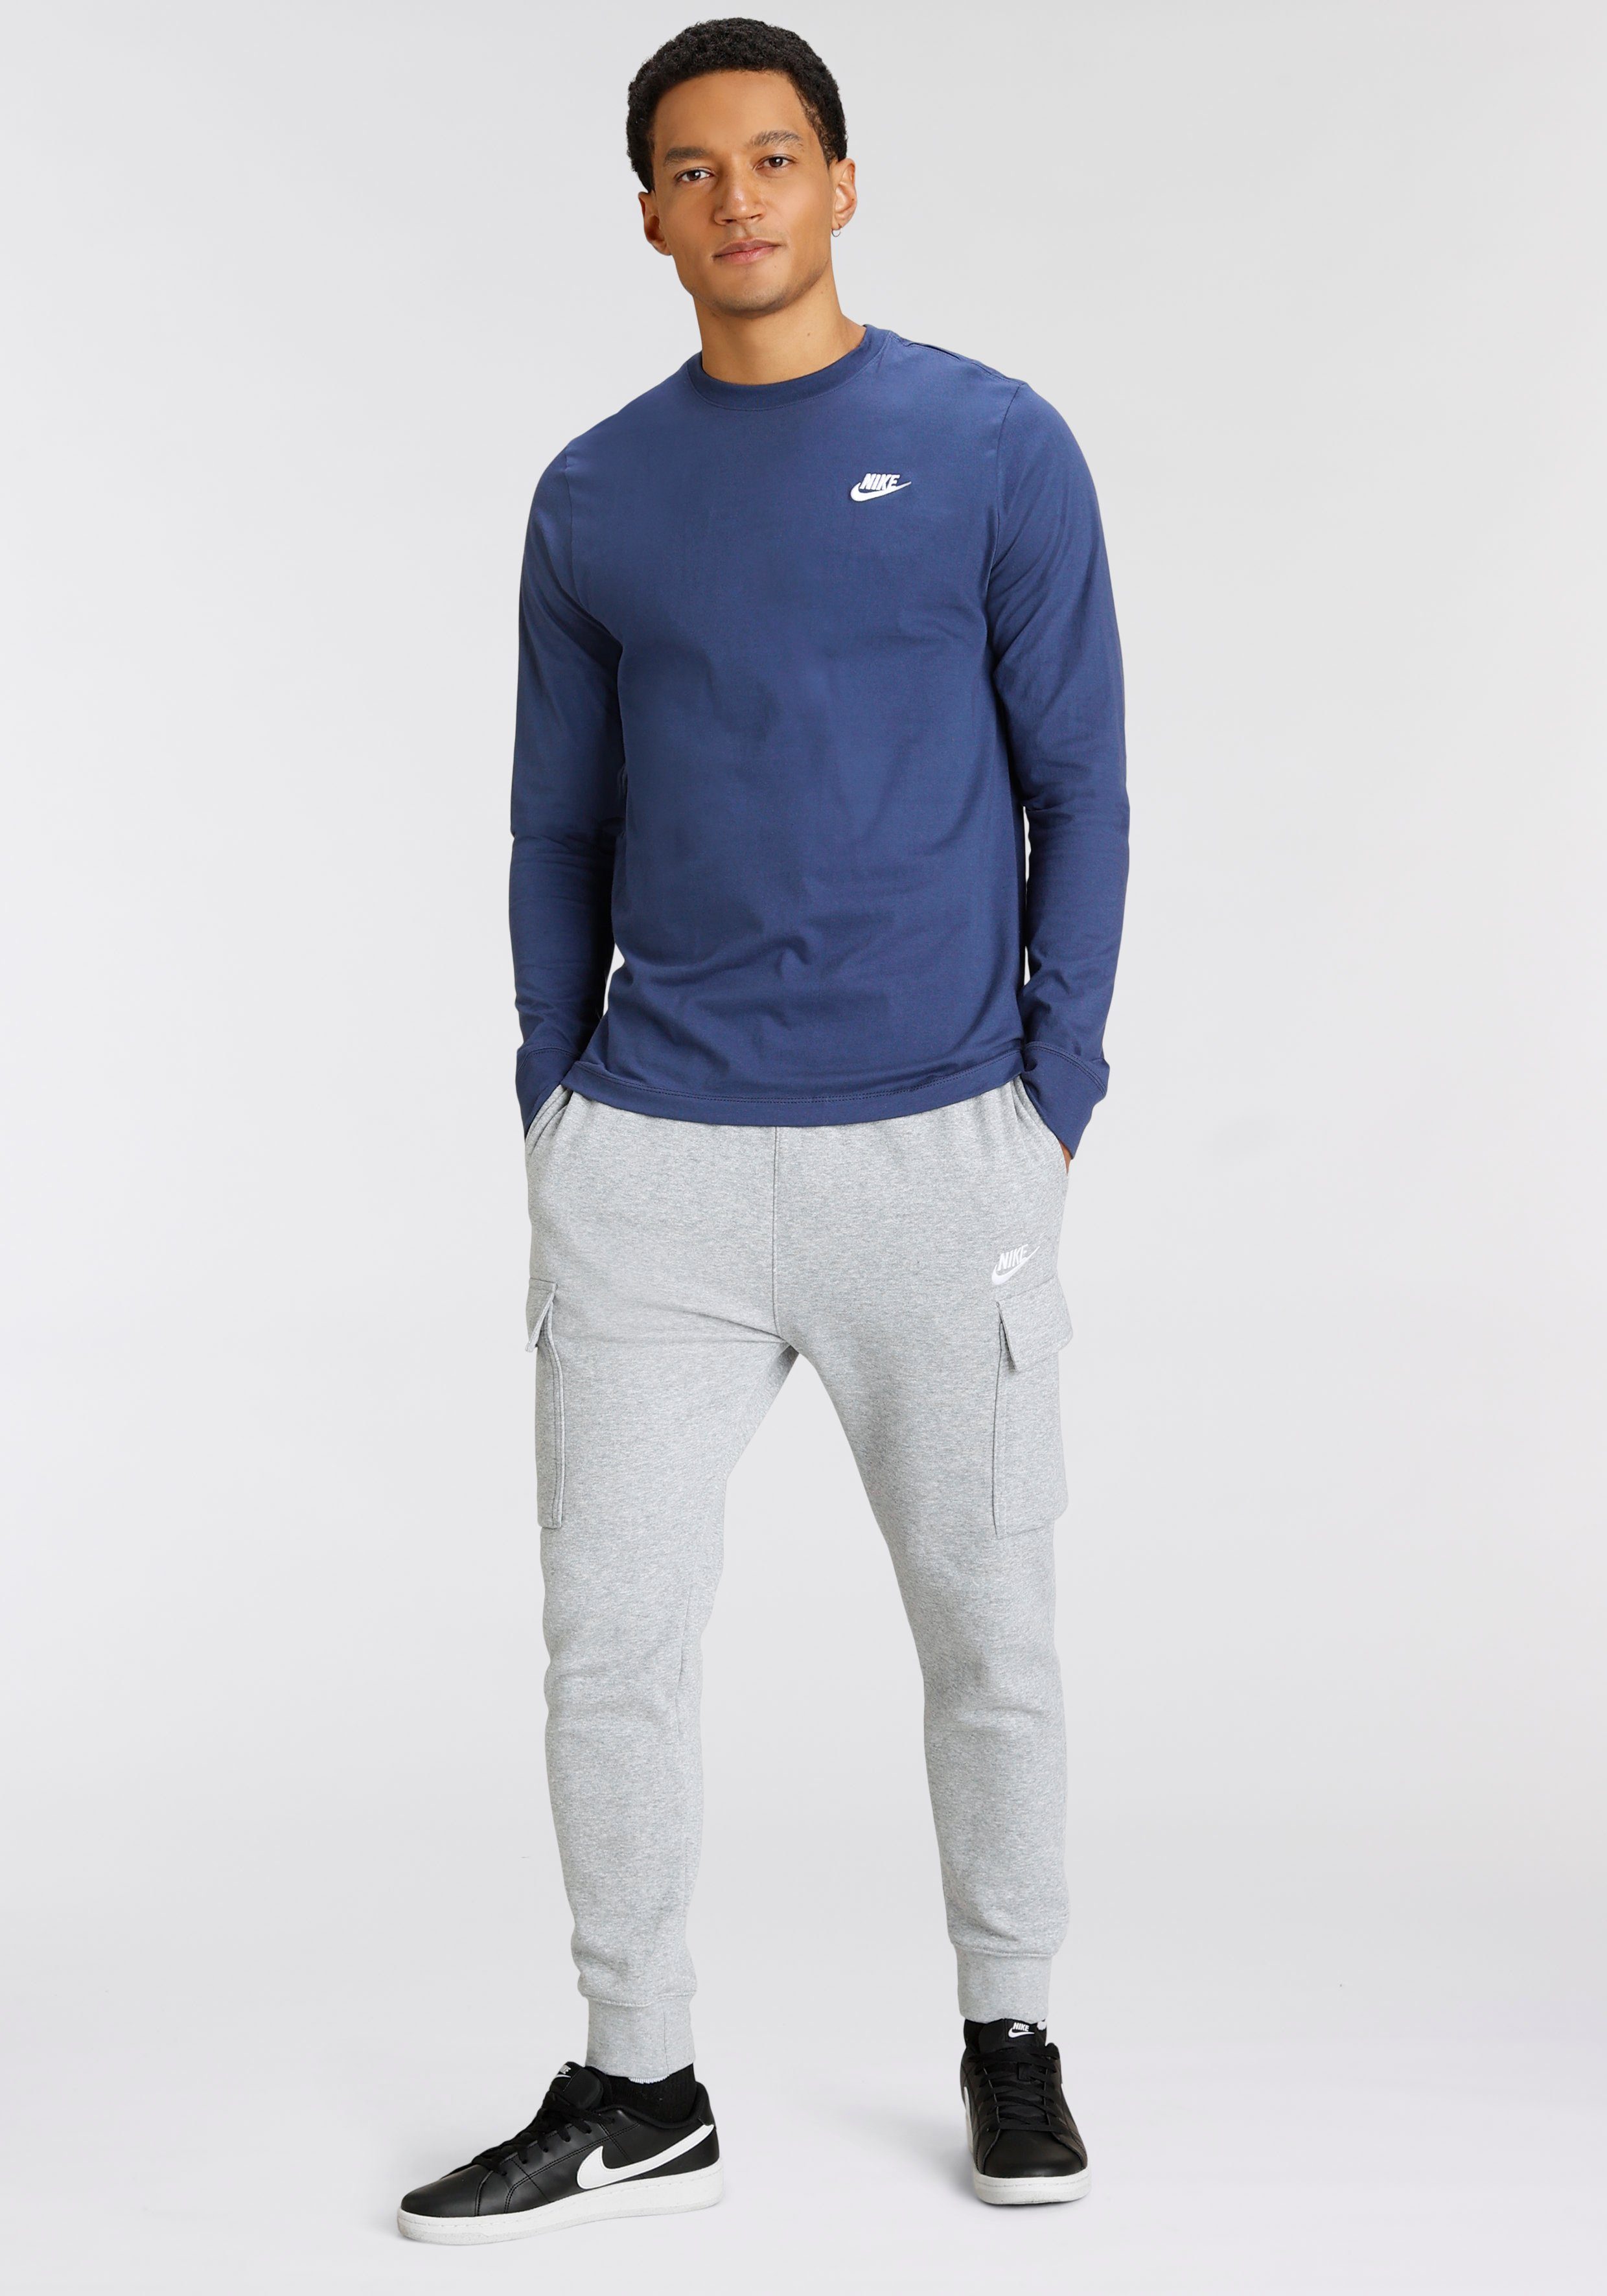 Nike MIDNIGHT Langarmshirt Sportswear T-SHIRT NAVY/WHITE LONG-SLEEVE MEN'S